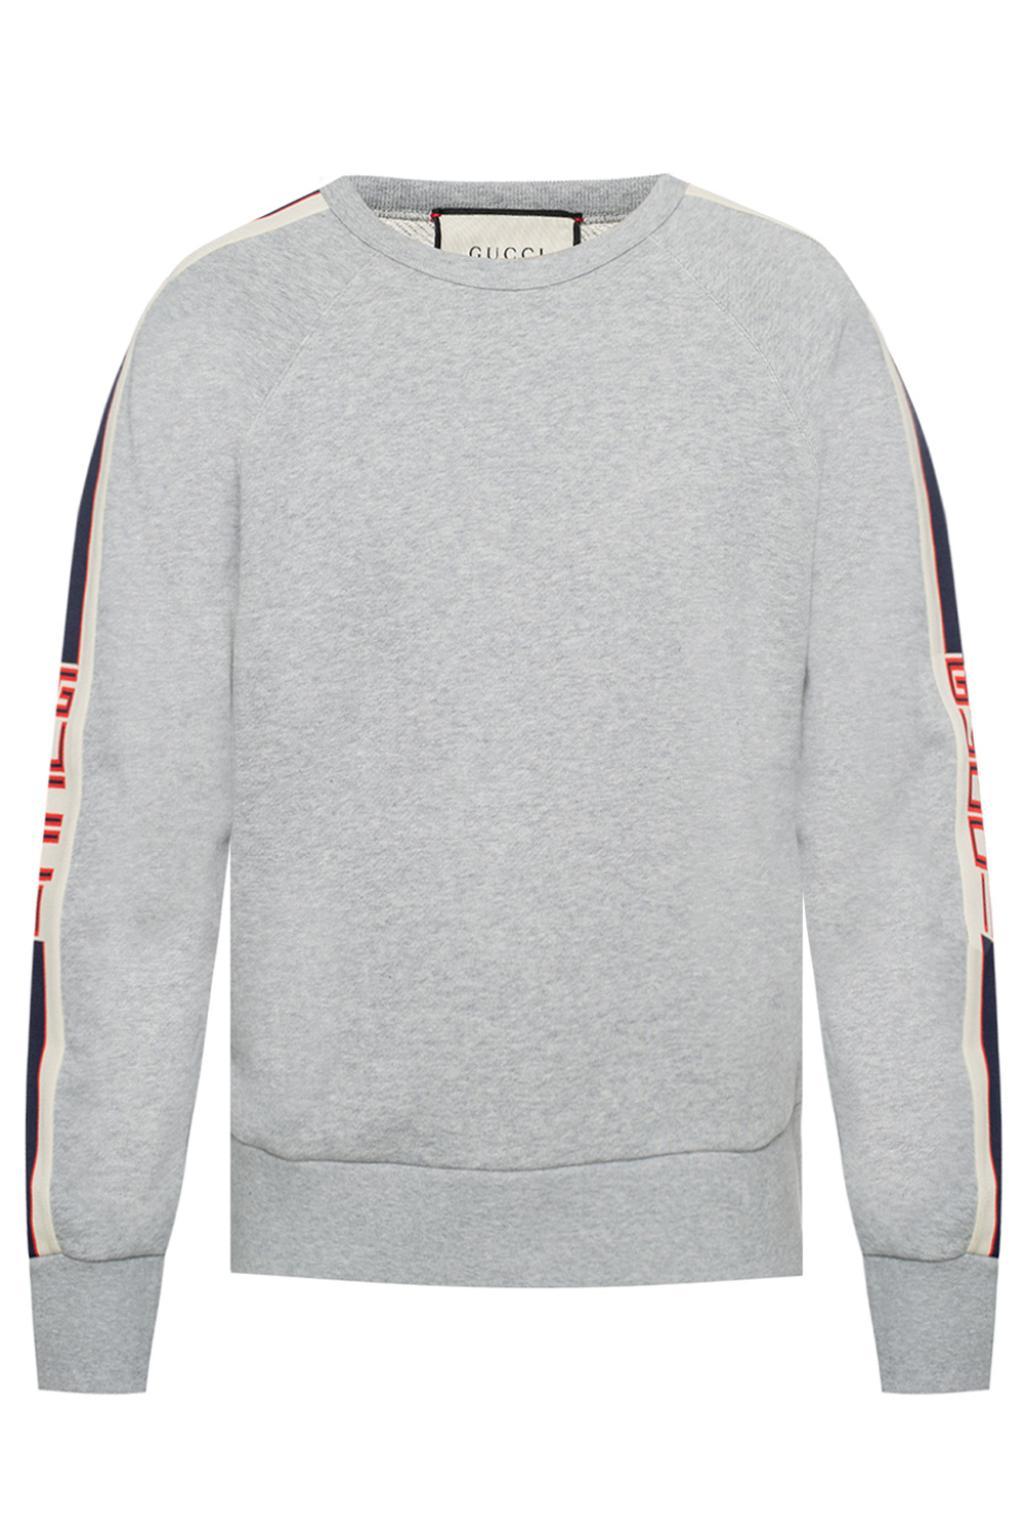 Depression se Ledsager Gucci Crewneck Sweatshirt in Gray for Men | Lyst